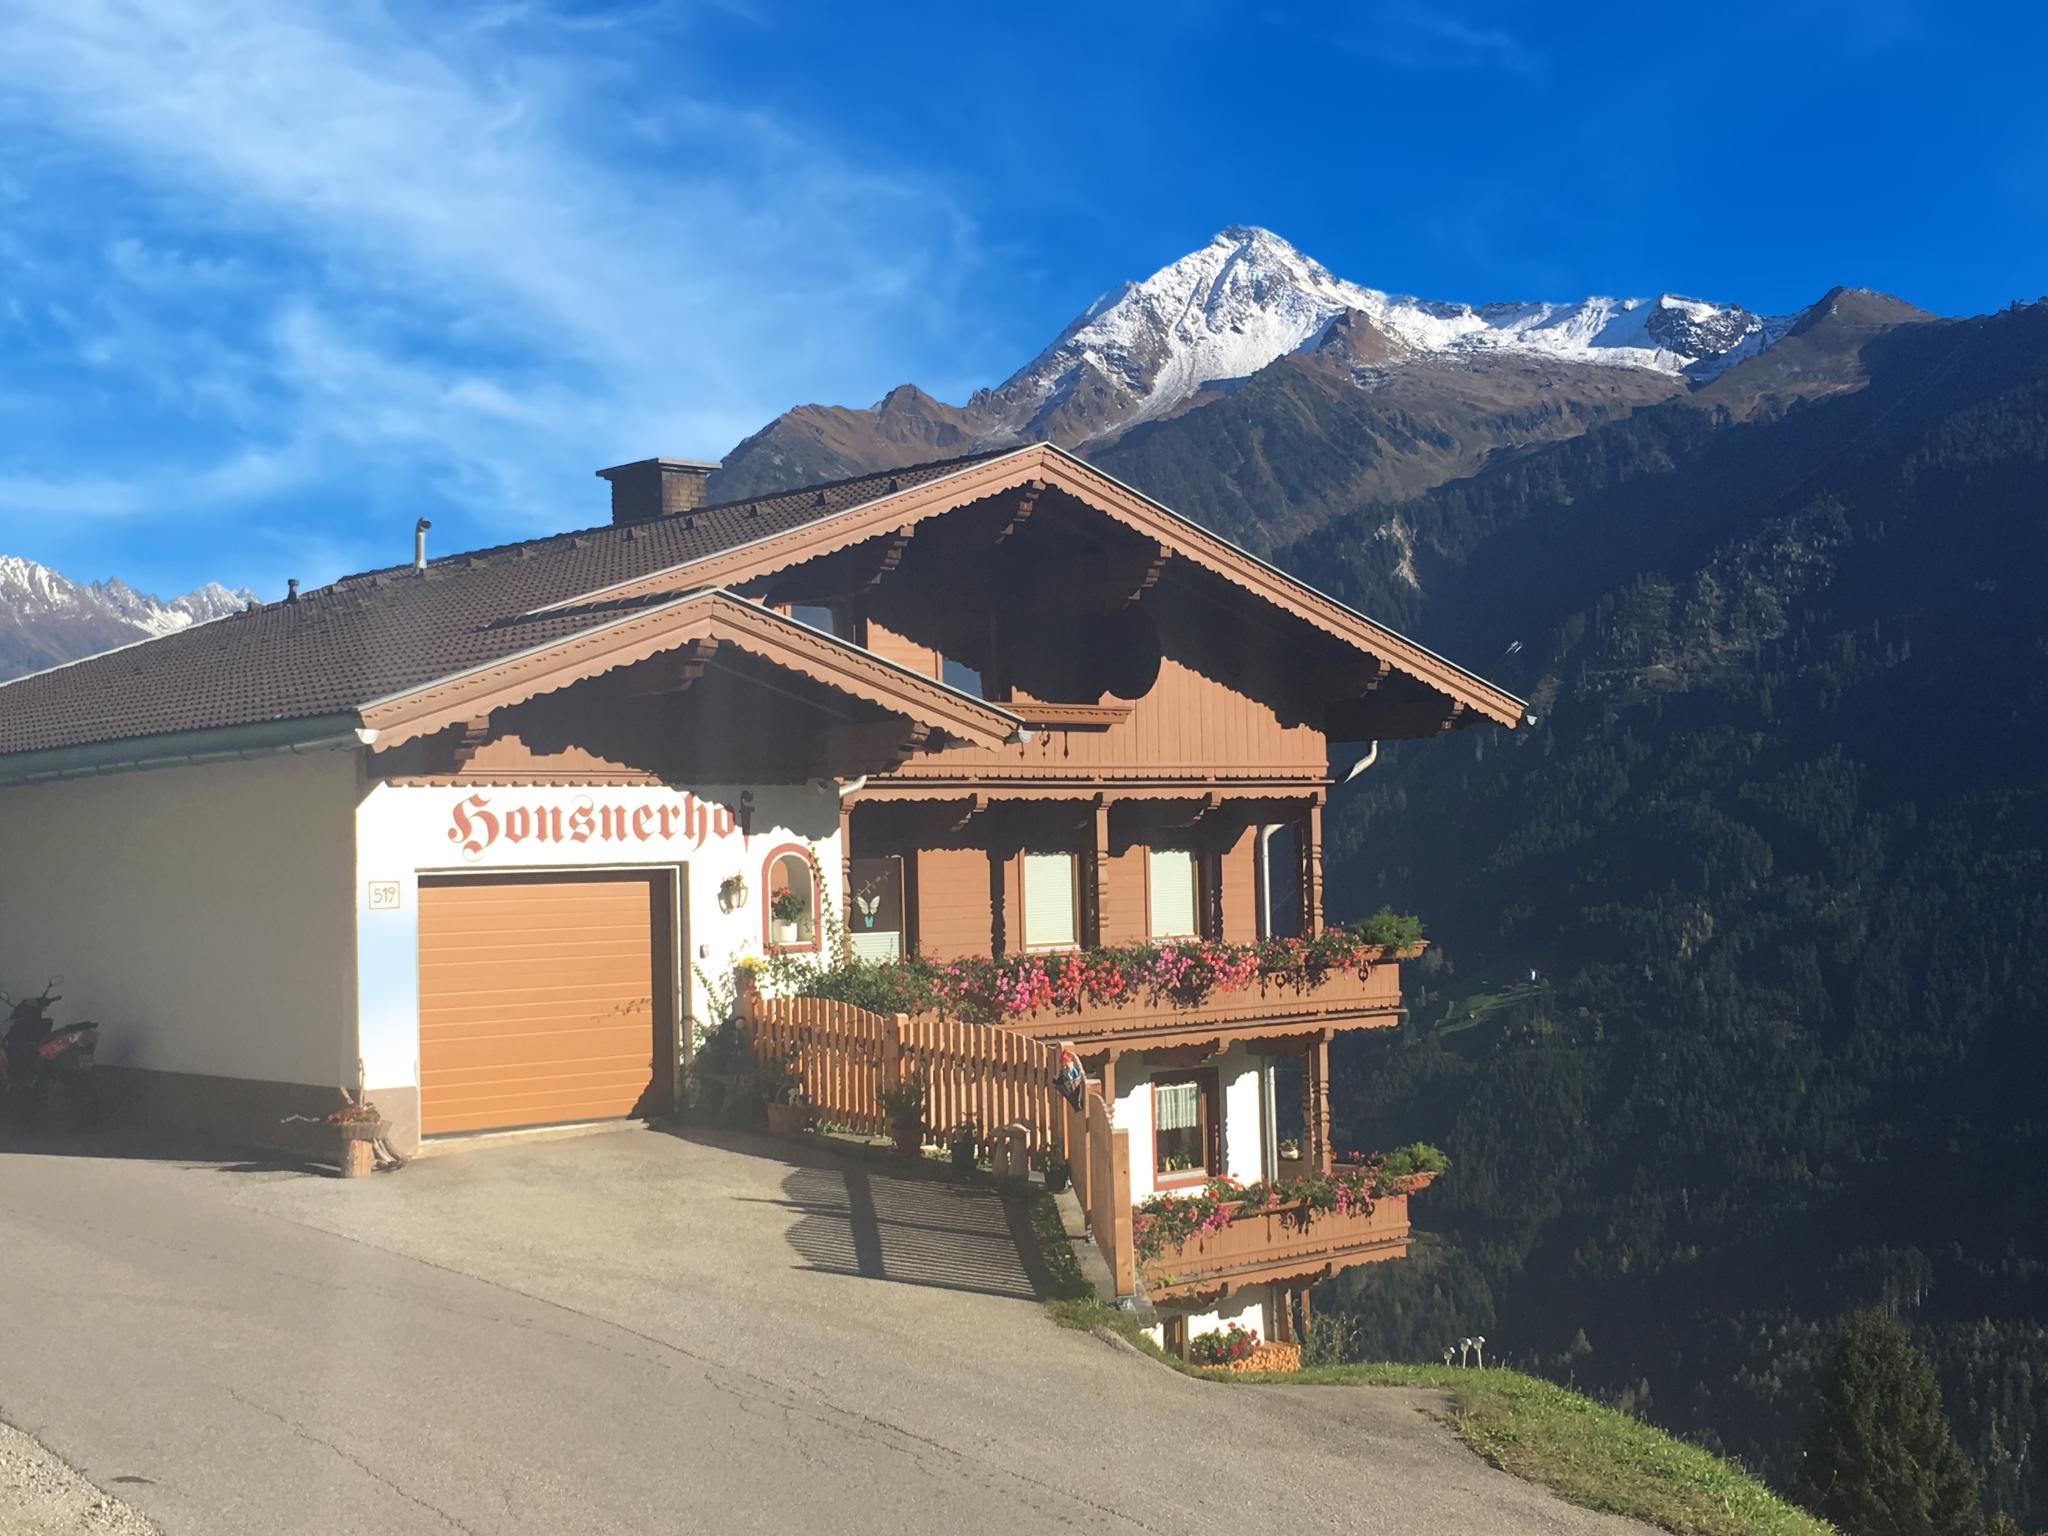 Honsnerhof Tirol